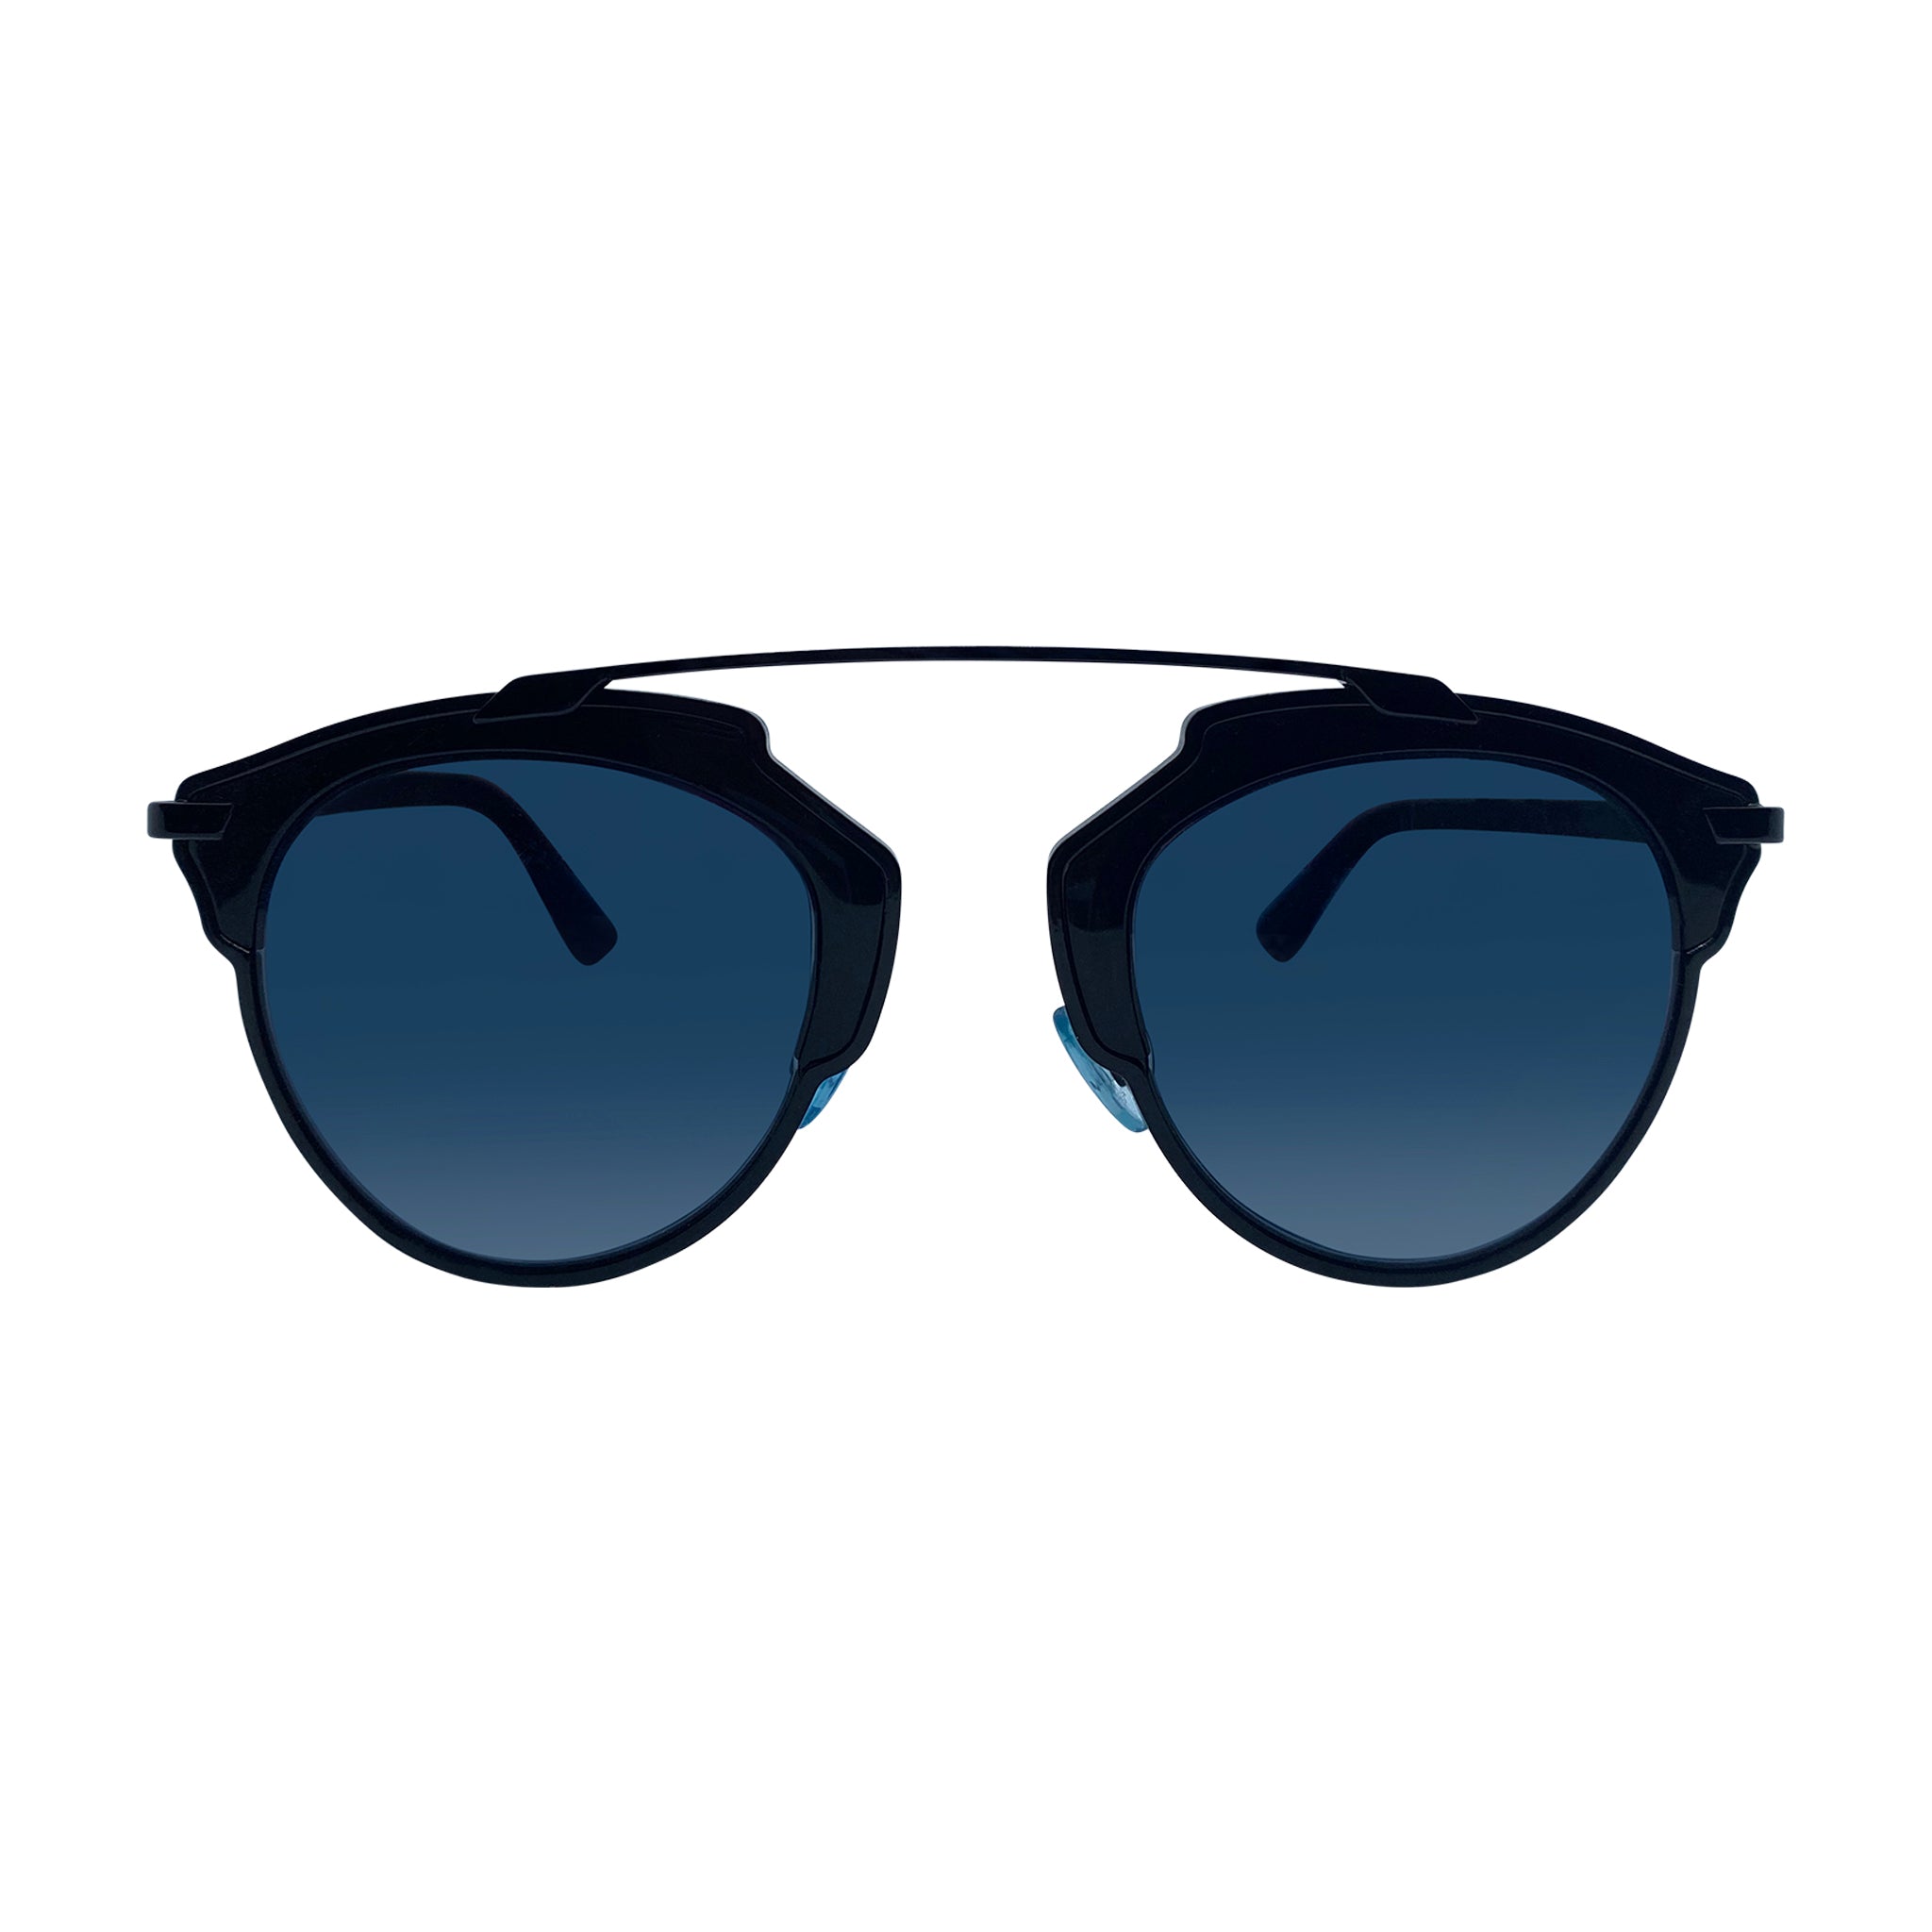 Christian Dior Sunglasses Women DIORCLUBM2U31B8 Acetate Blue Blue Navy 322